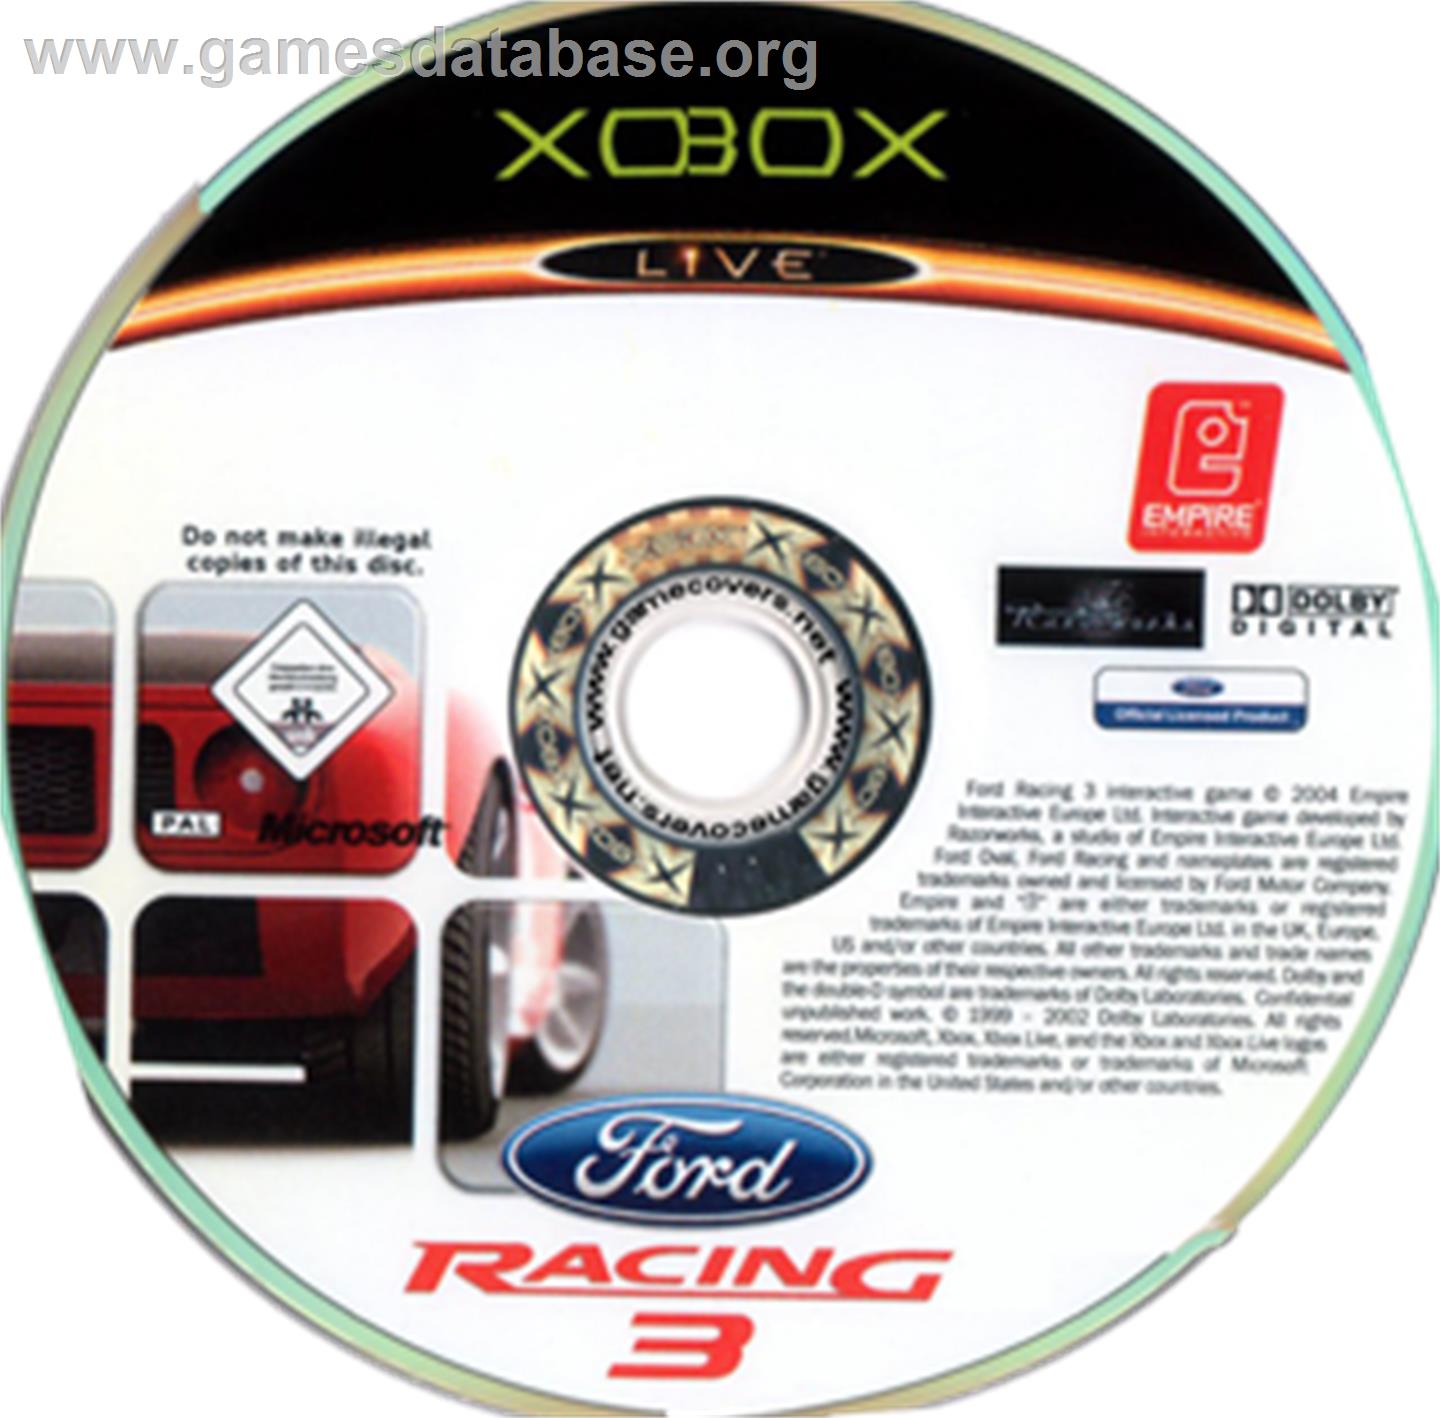 Ford Racing 3 - Microsoft Xbox - Artwork - CD